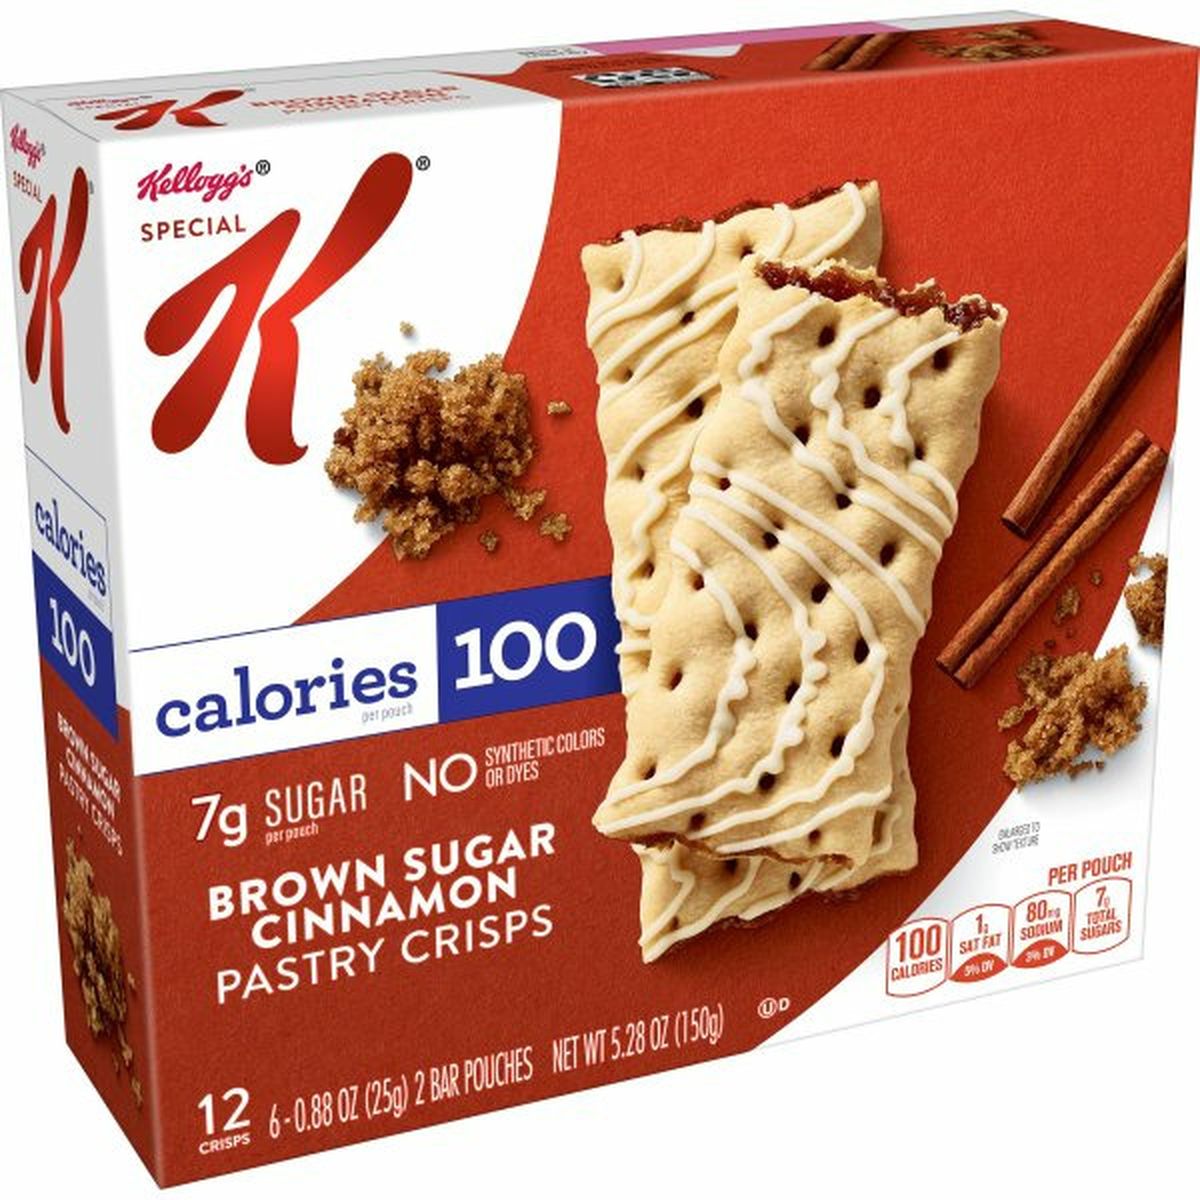 Calories in Kellogg's Special K Bars Kellogg's Special K Pastry Crisps, Brown Sugar Cinnamon, 12ct 5.28oz